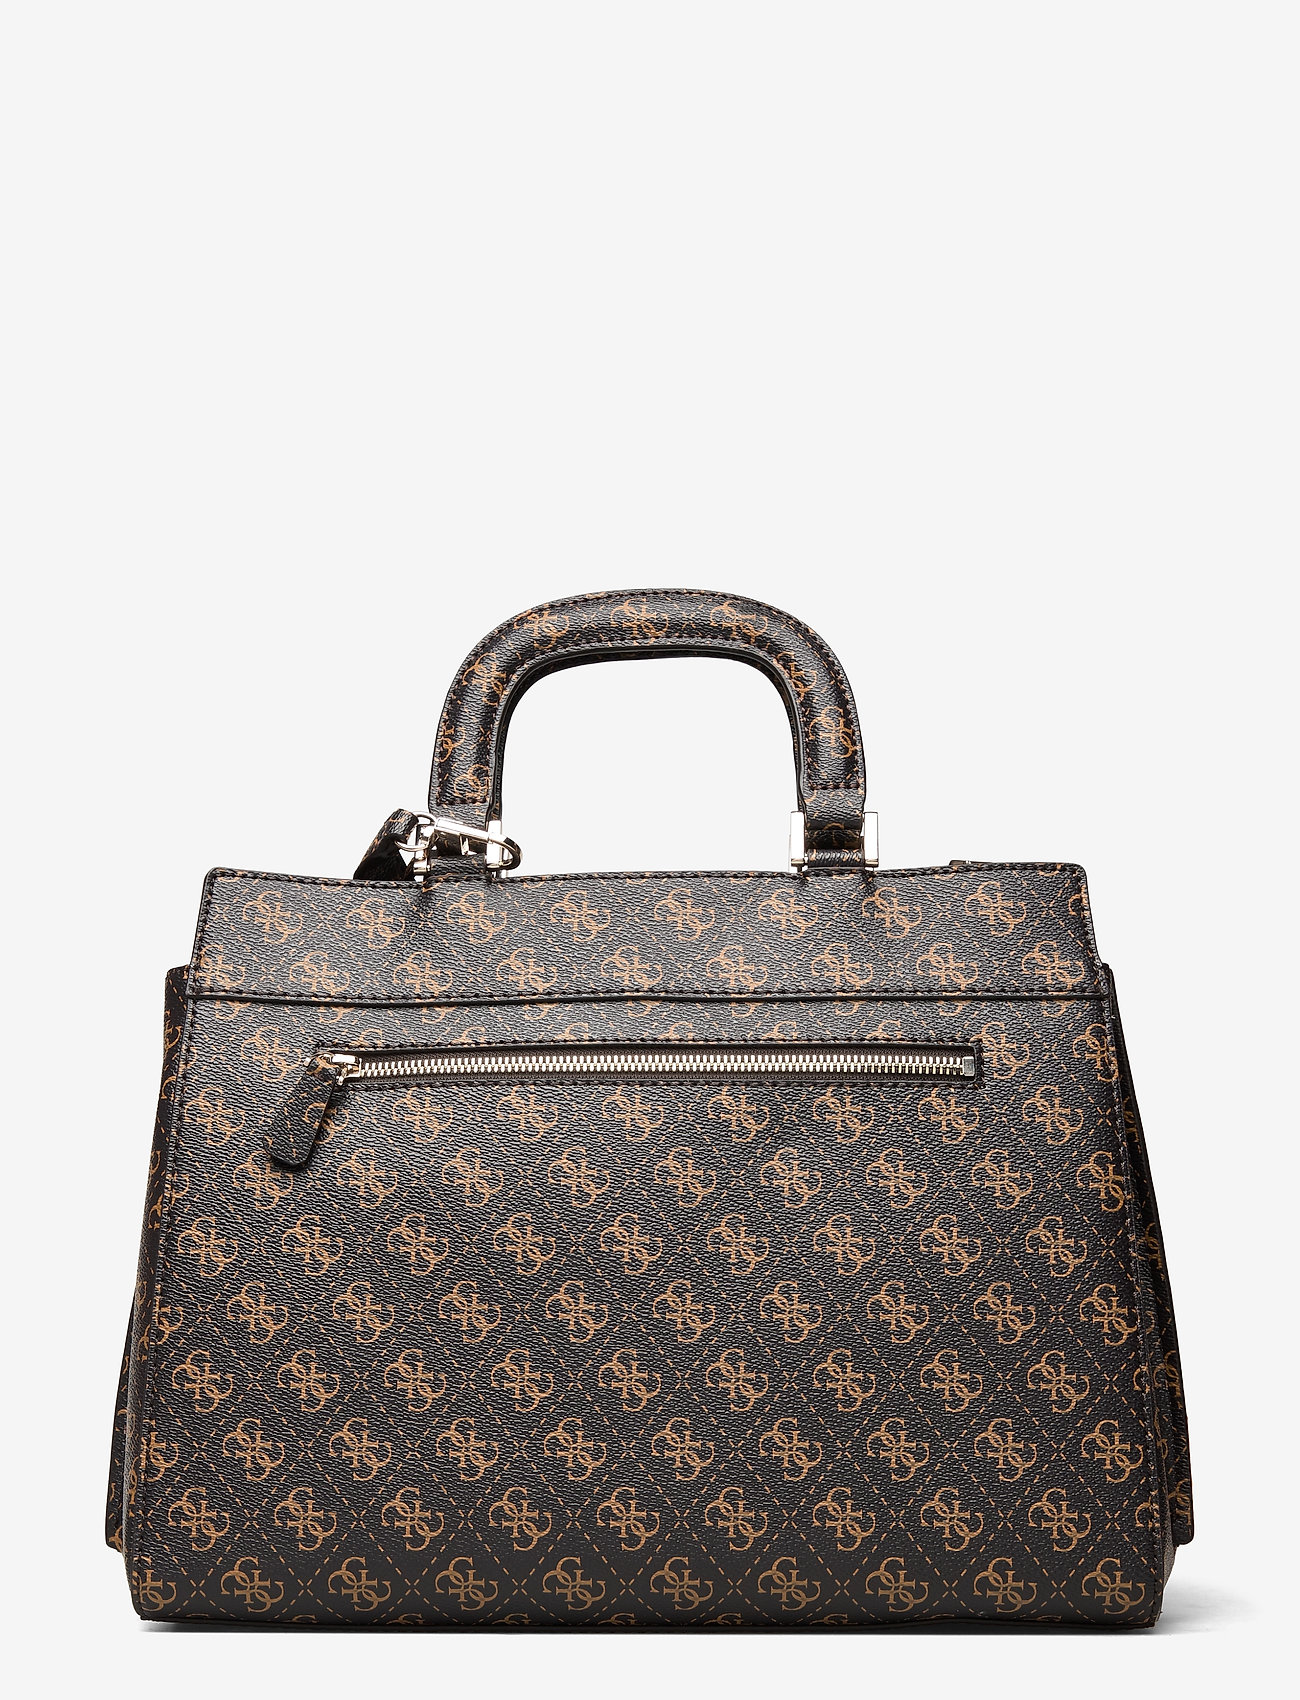 GUESS Katey Luxury Satchel Handbags | Boozt.com